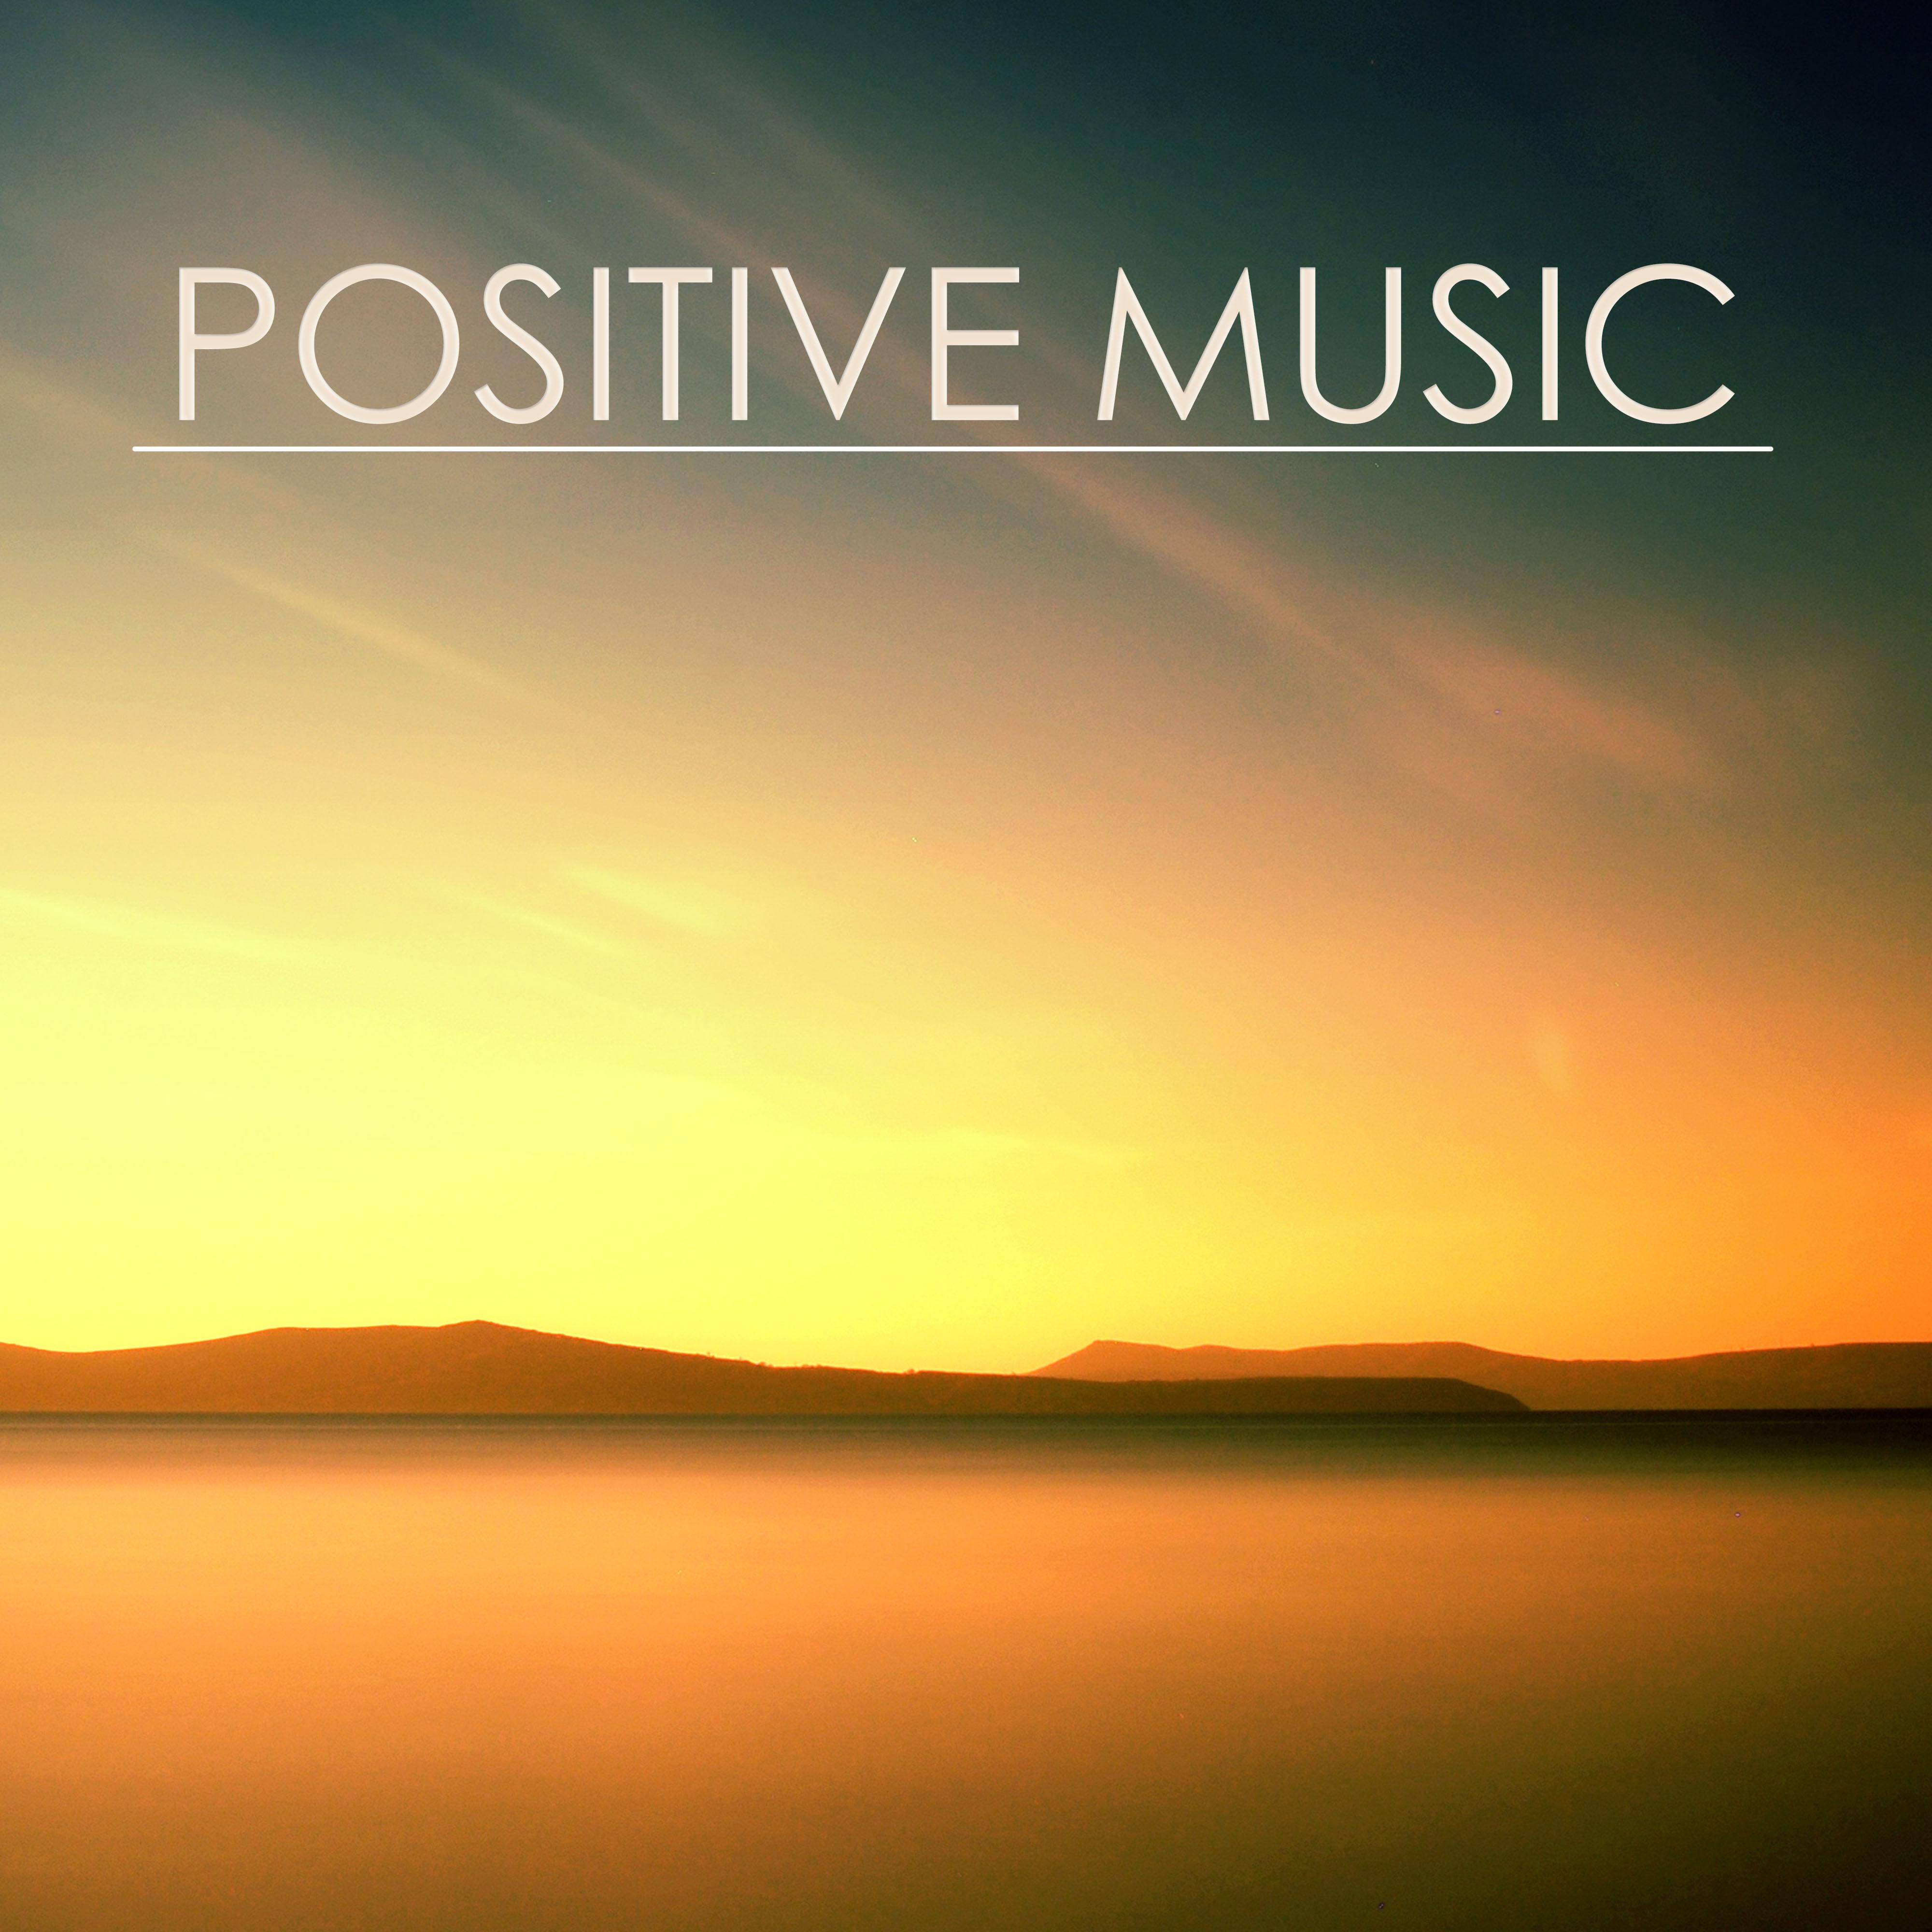 Positive Music - Relaxing Sounds for Spiritual Healing & Mindfulness Meditations